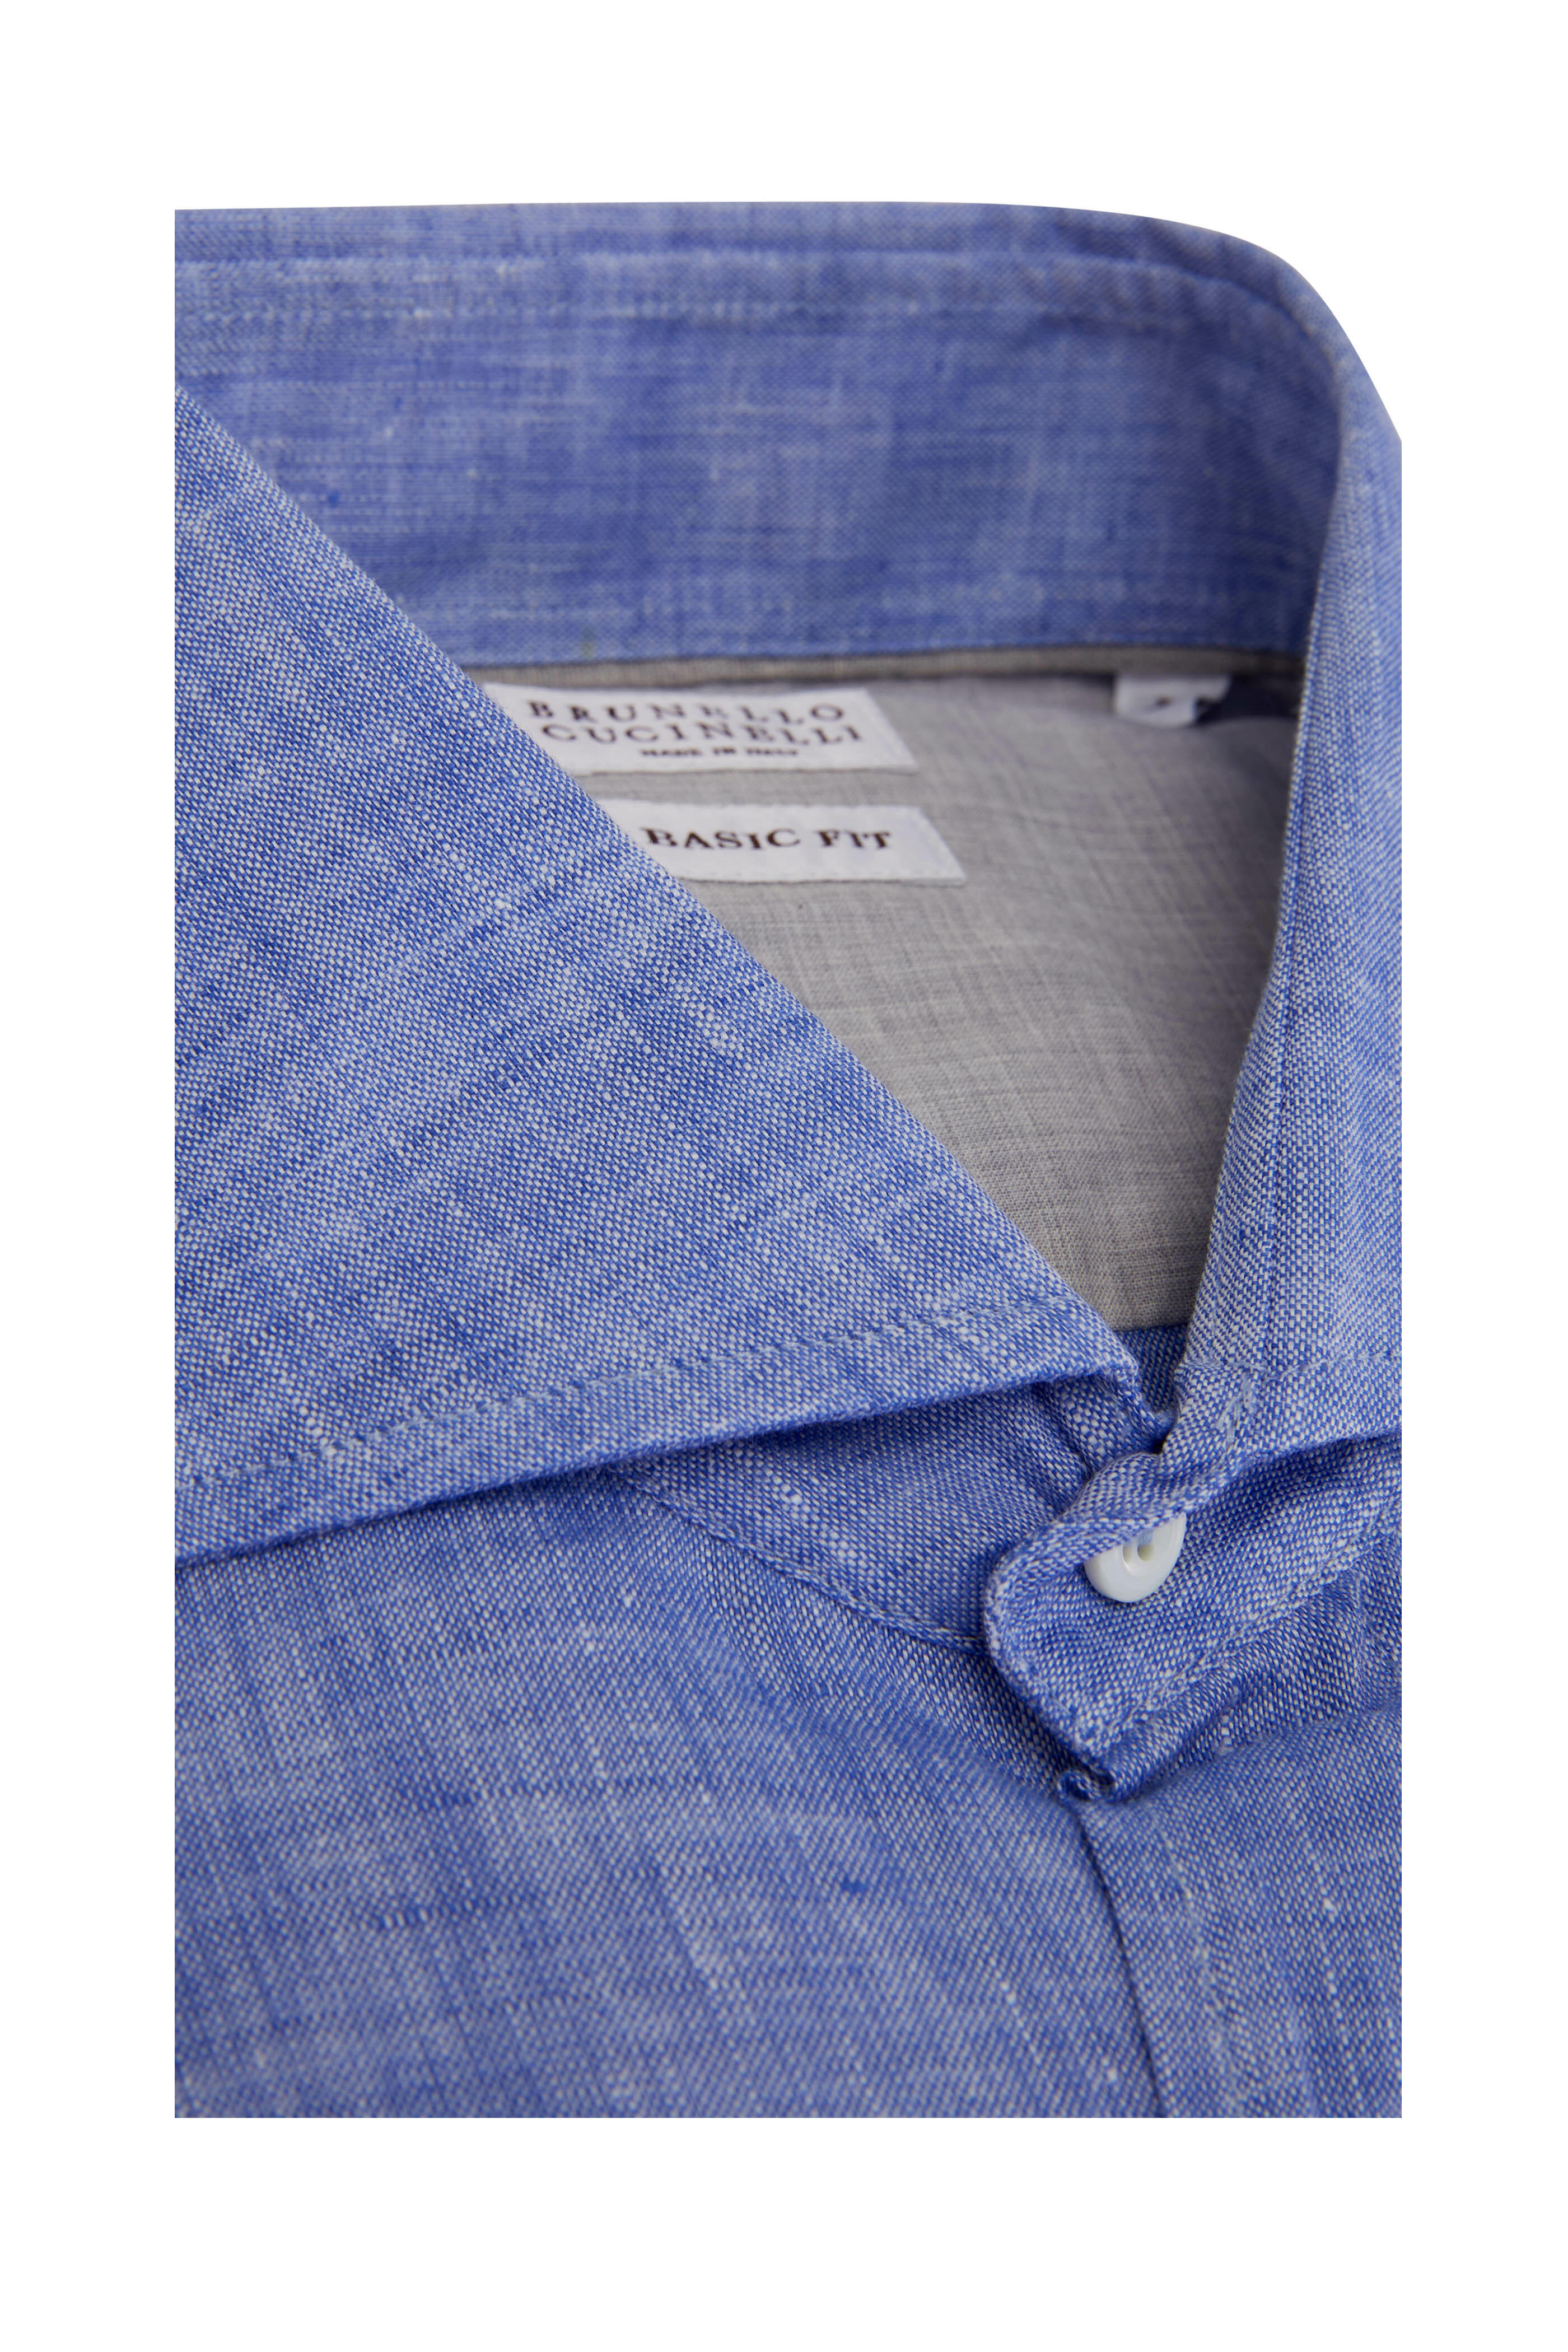 Brunello Cucinelli - Blue Linen Sport Shirt | Mitchell Stores